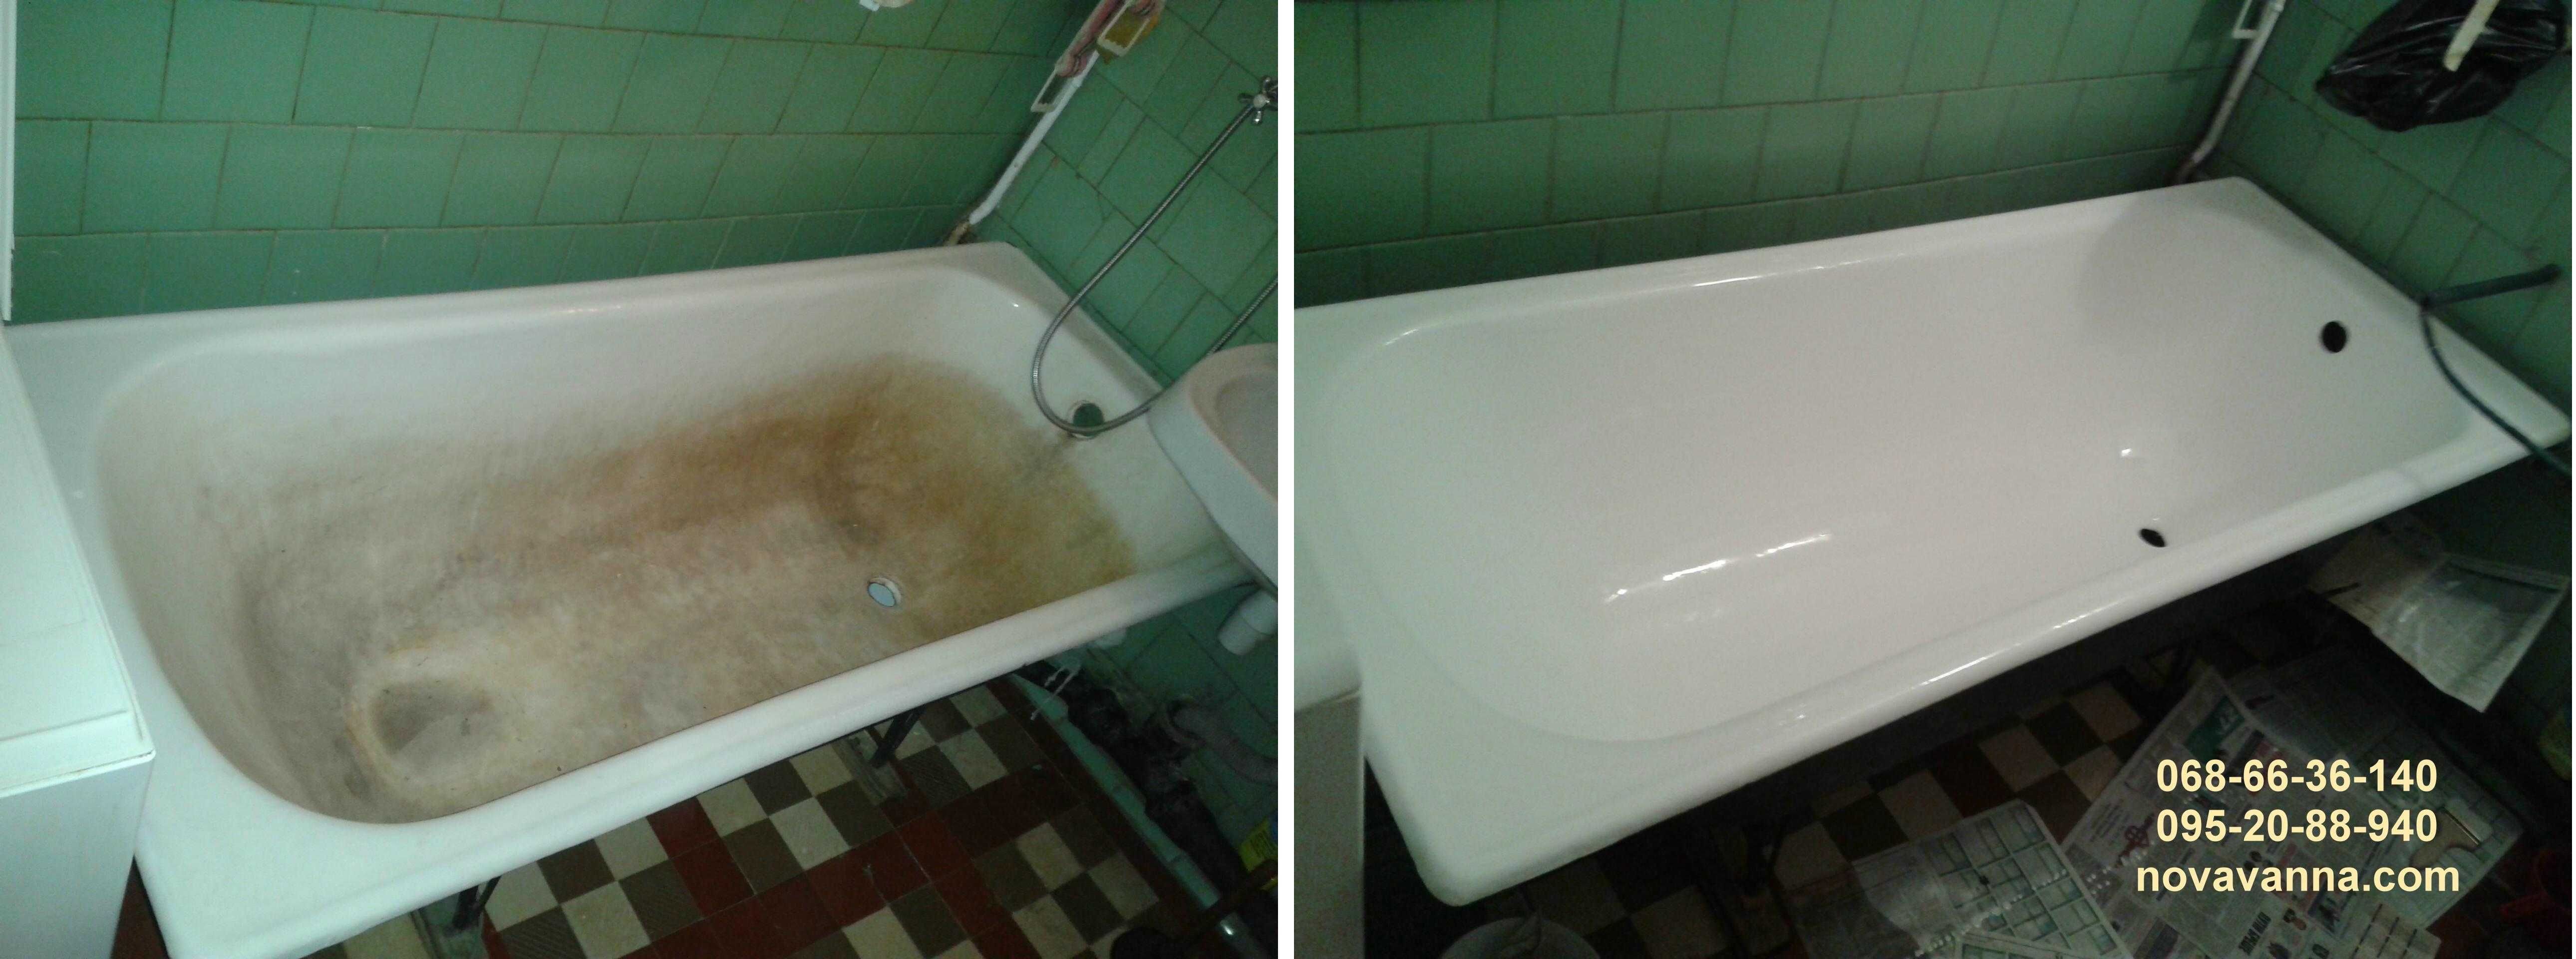 Реставрация ванн СМЕЛА. Восстановление ванн в Смеле. Гарантия!